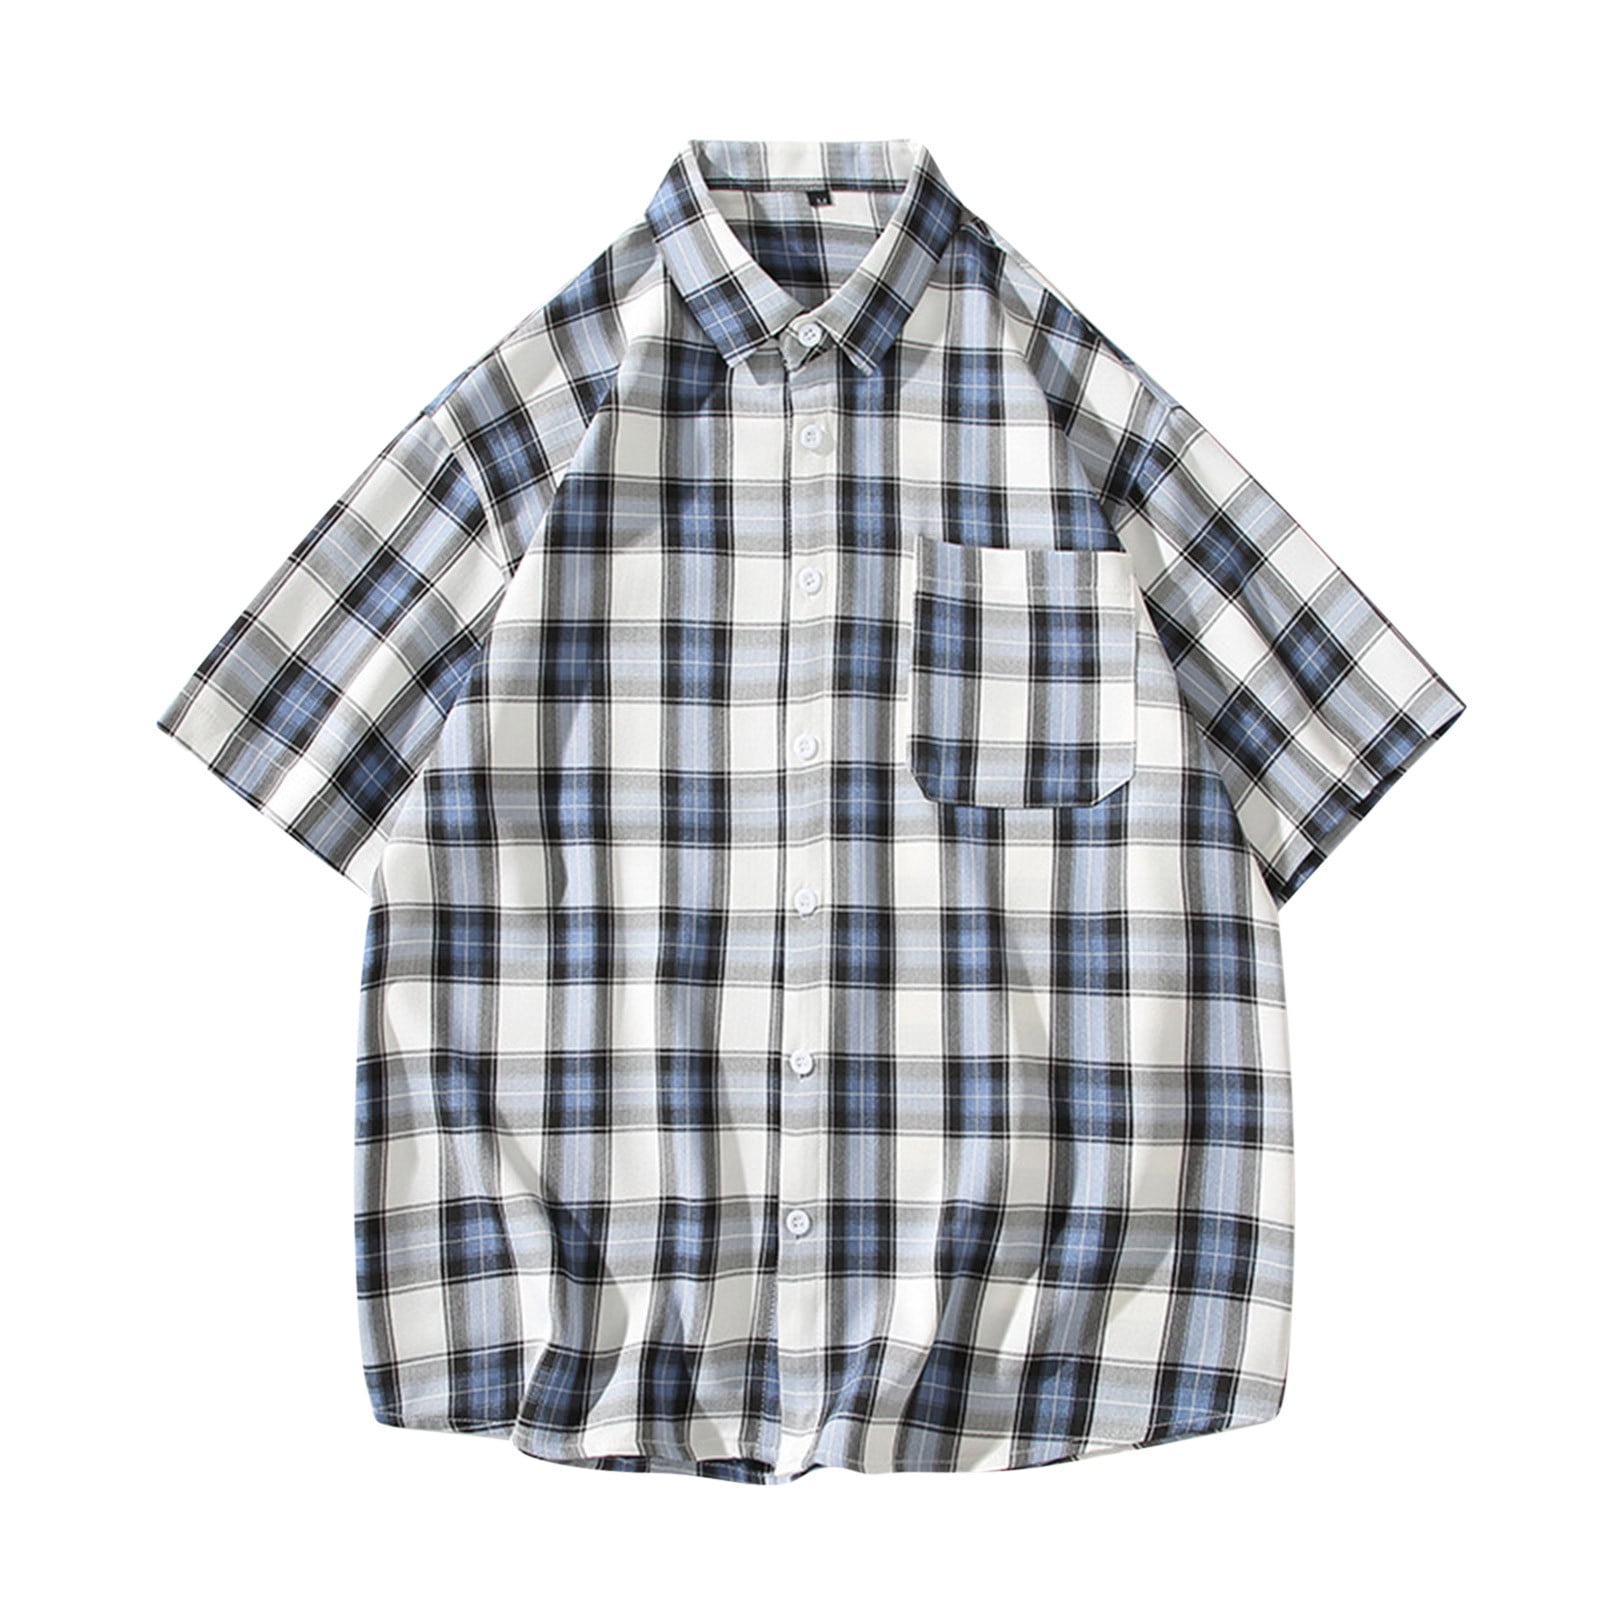 YYDGH Men's Plaid Short Sleeve Button Down Shirts Casual Cotton Classic  Dress Shirts with Pocket Blue XXL 